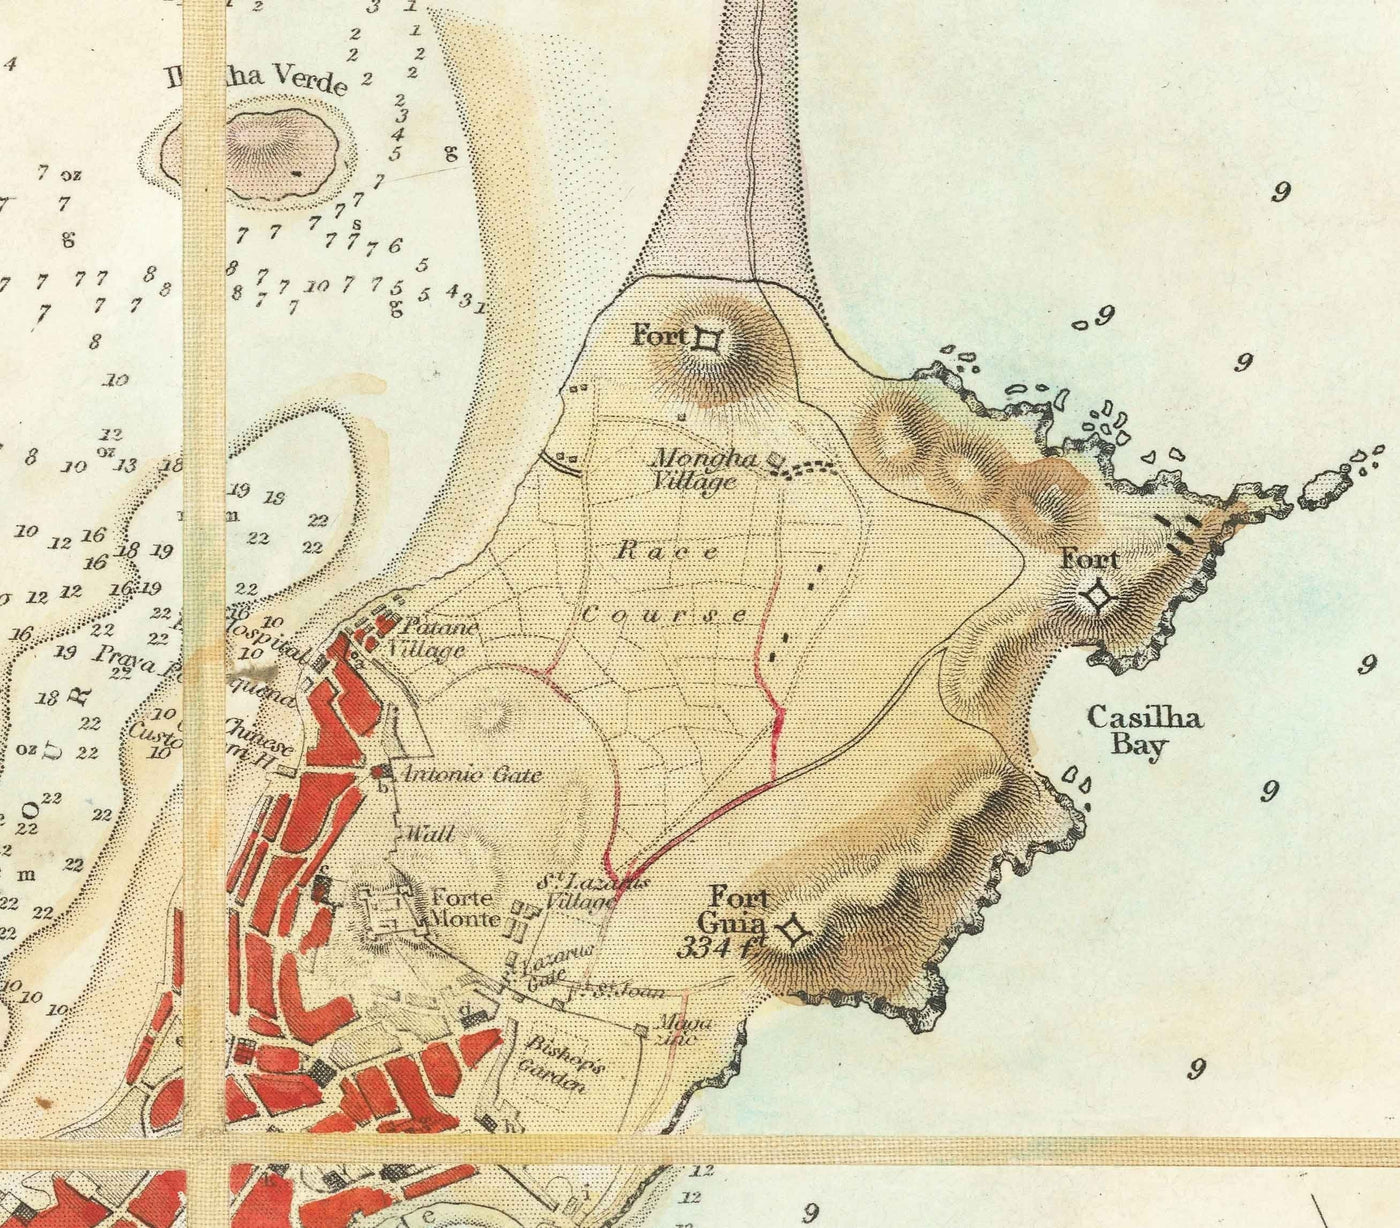 Old Map of Macao, 1840 - Navy Sea Chart of Colonial Portuguese Macau, Taipa, Coloane, Hengqin, Guangdong